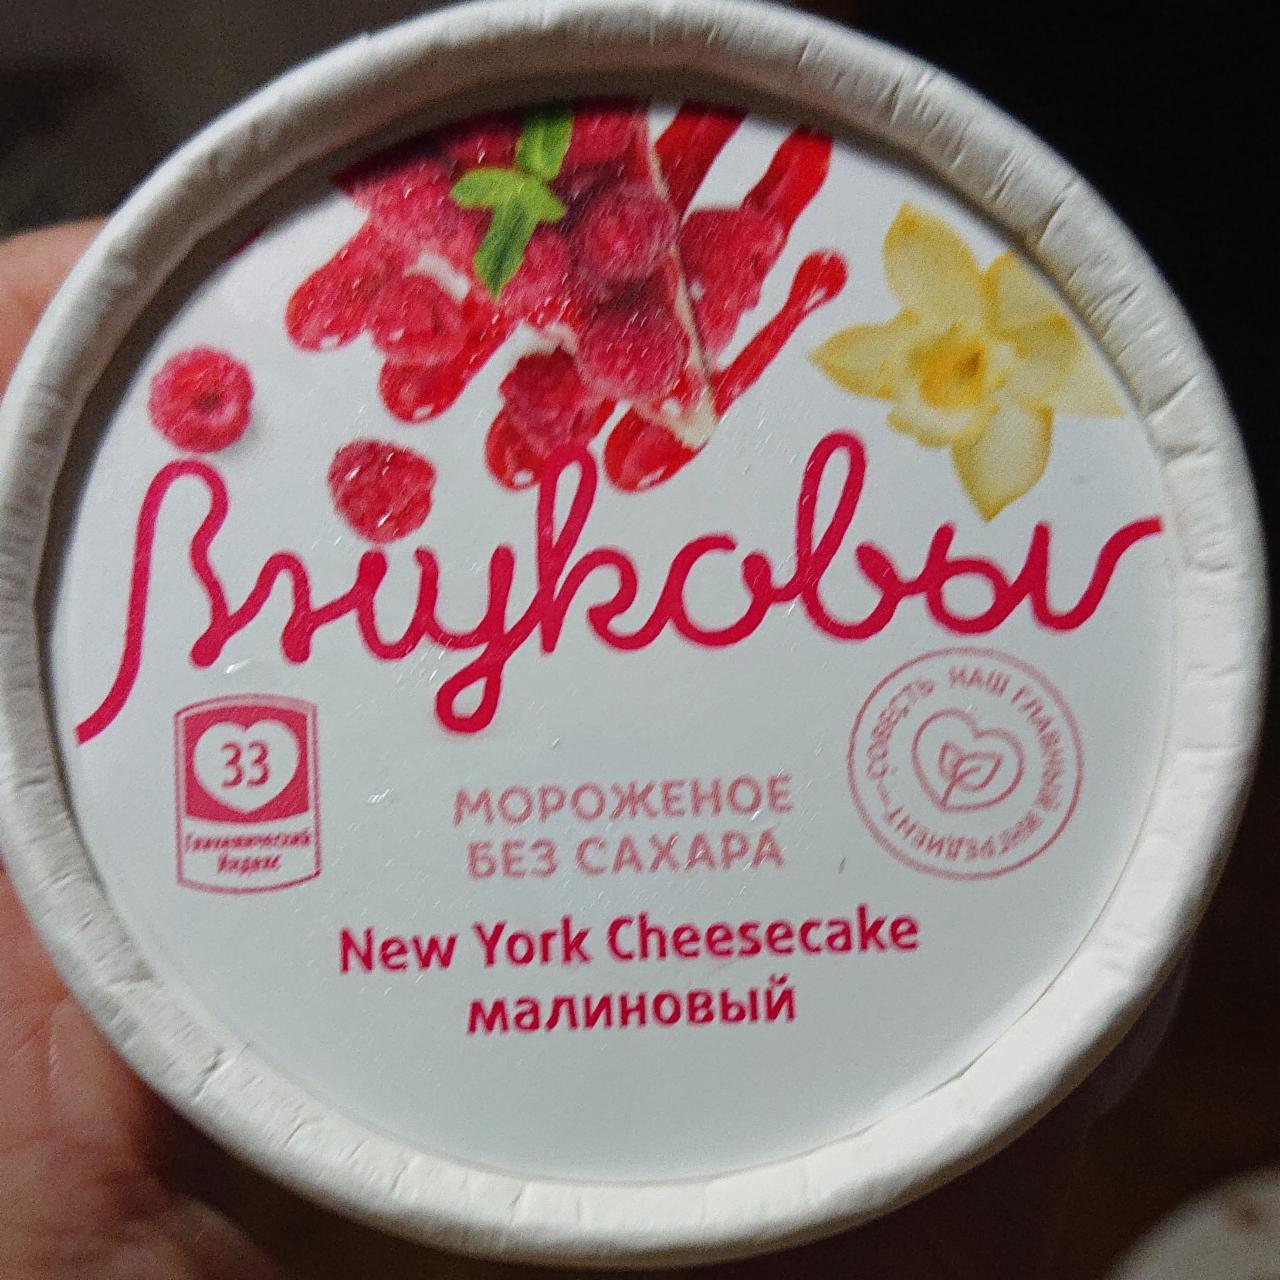 Фото - Мороженое без сахара чизкейк малиновый New York cheesecake Внуковы